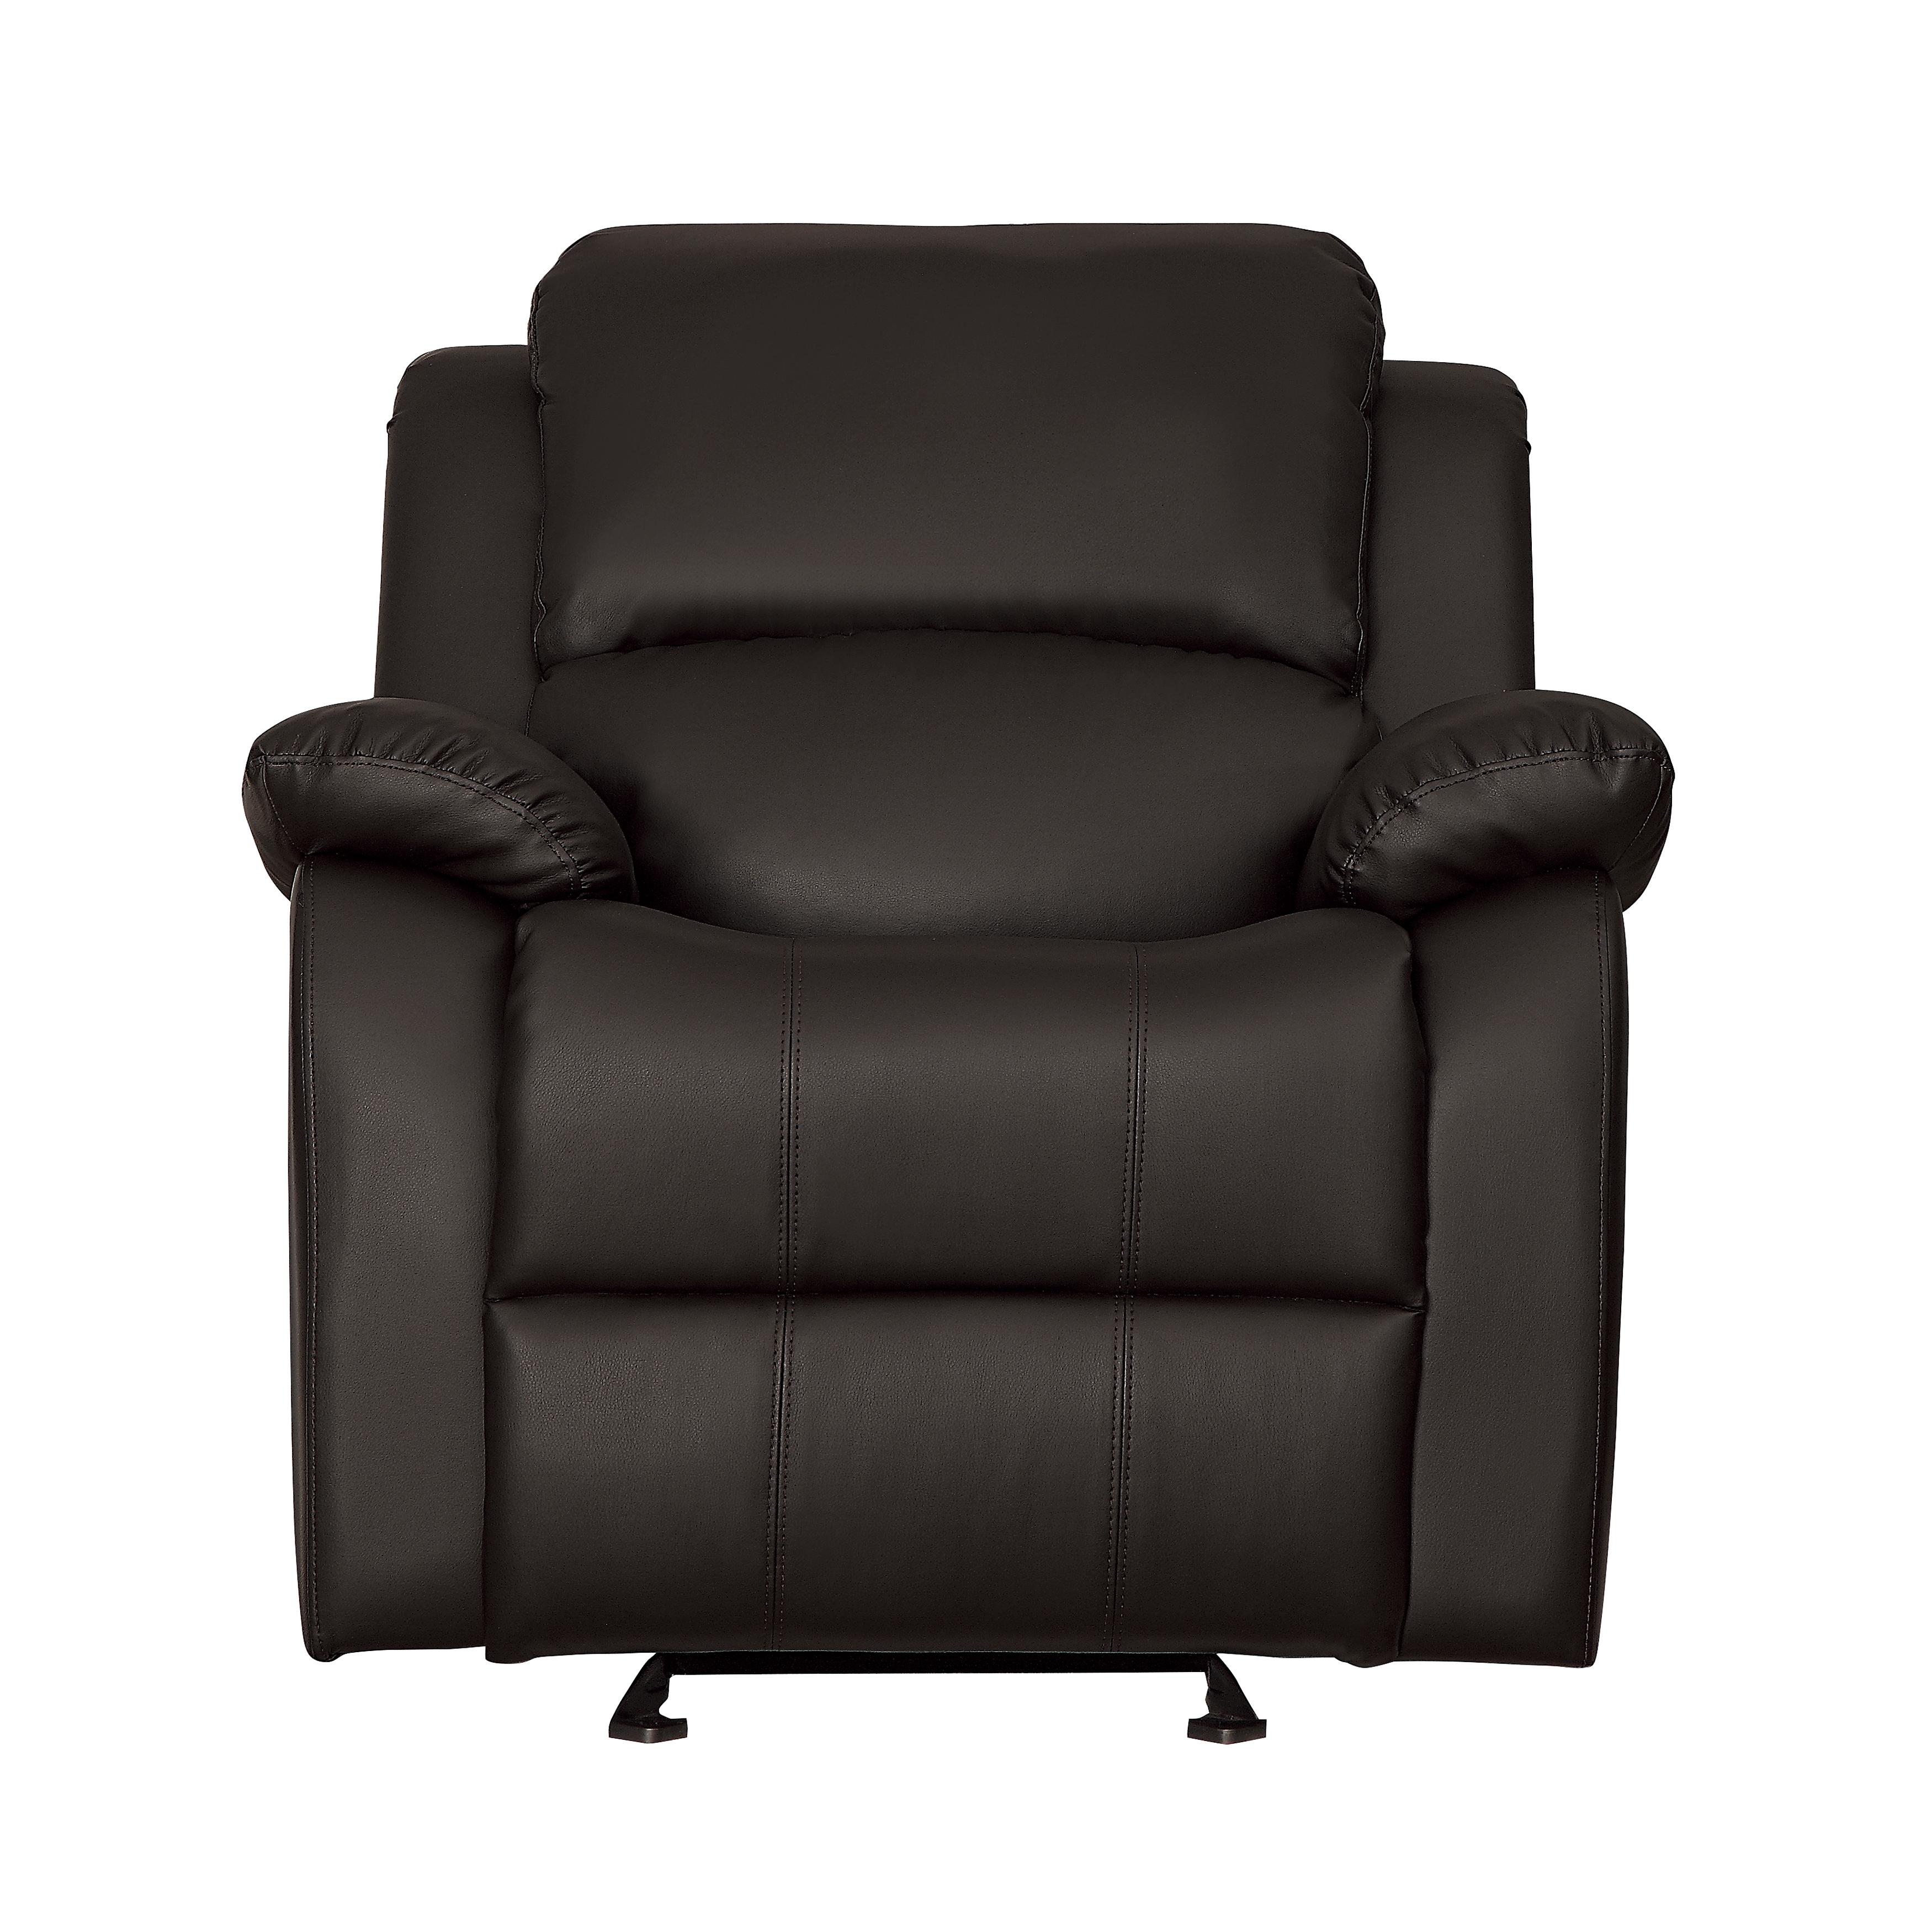 Transitional Reclining Chair 9928DBR-1 Clarkdale 9928DBR-1 in Dark Brown Faux Leather